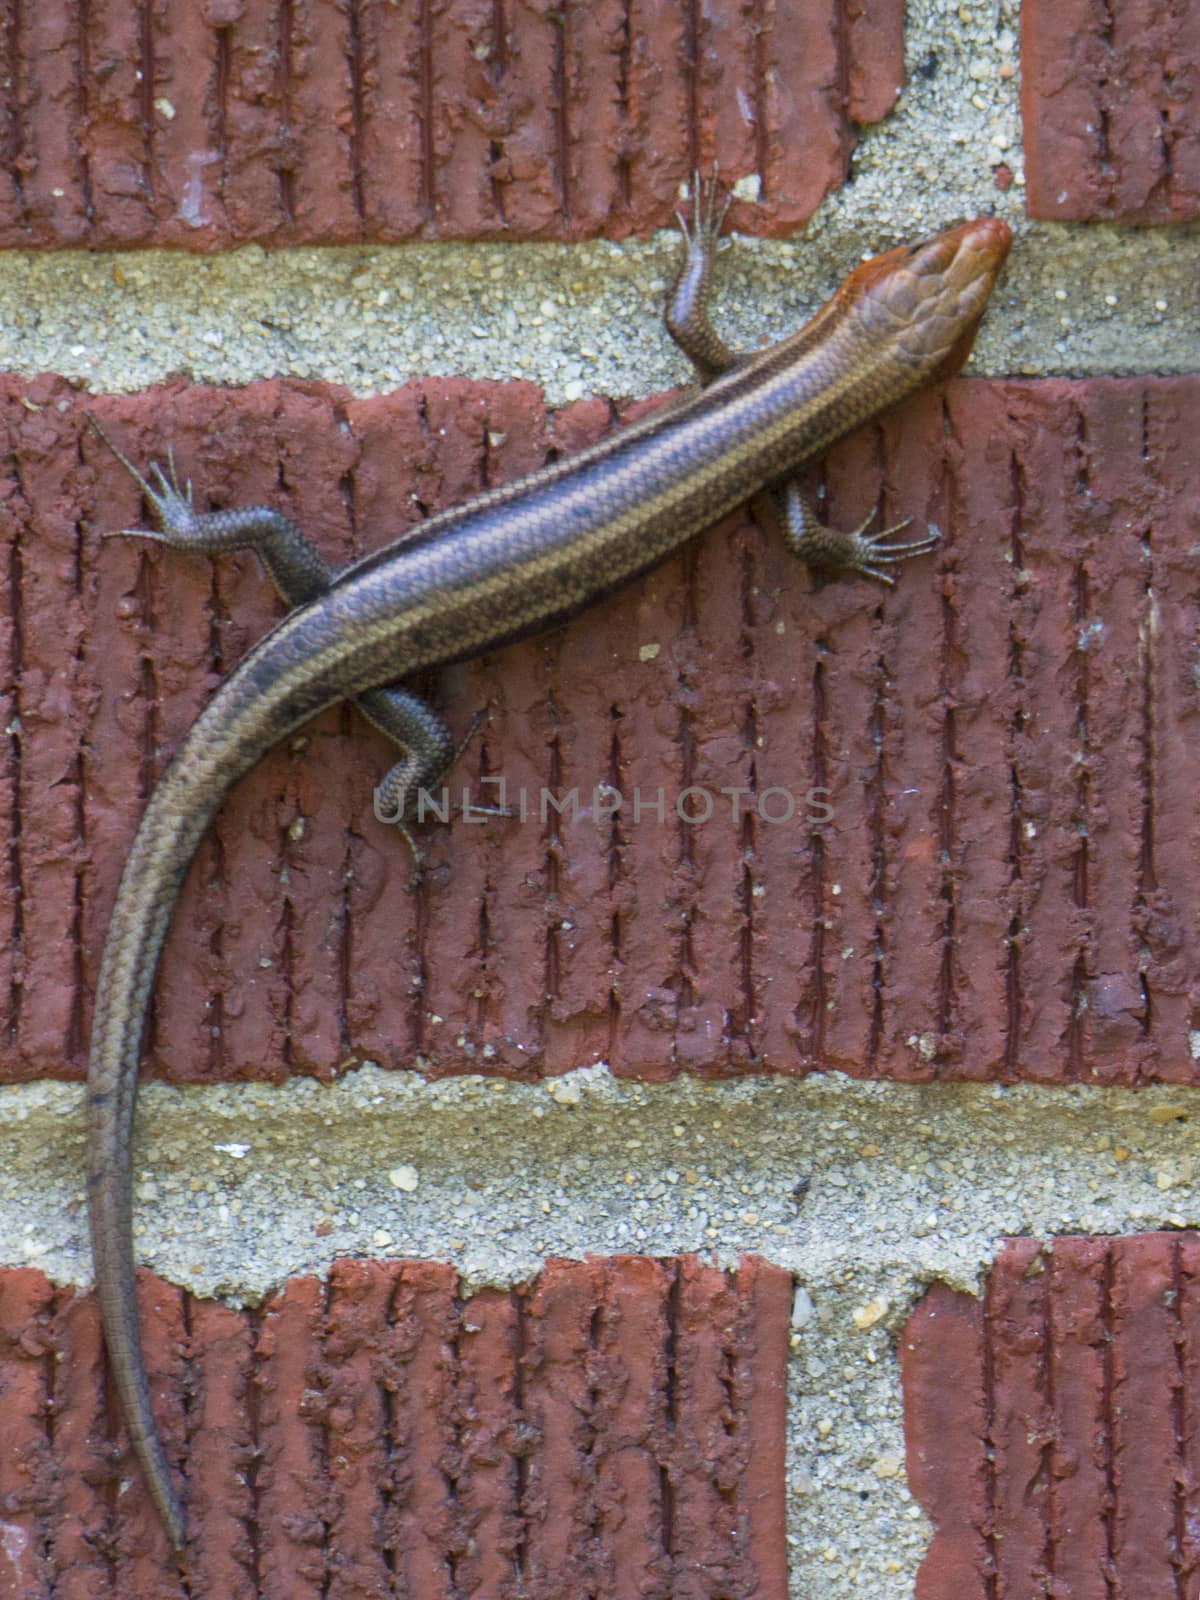 Lizard on brick wall by CharlieFloyd